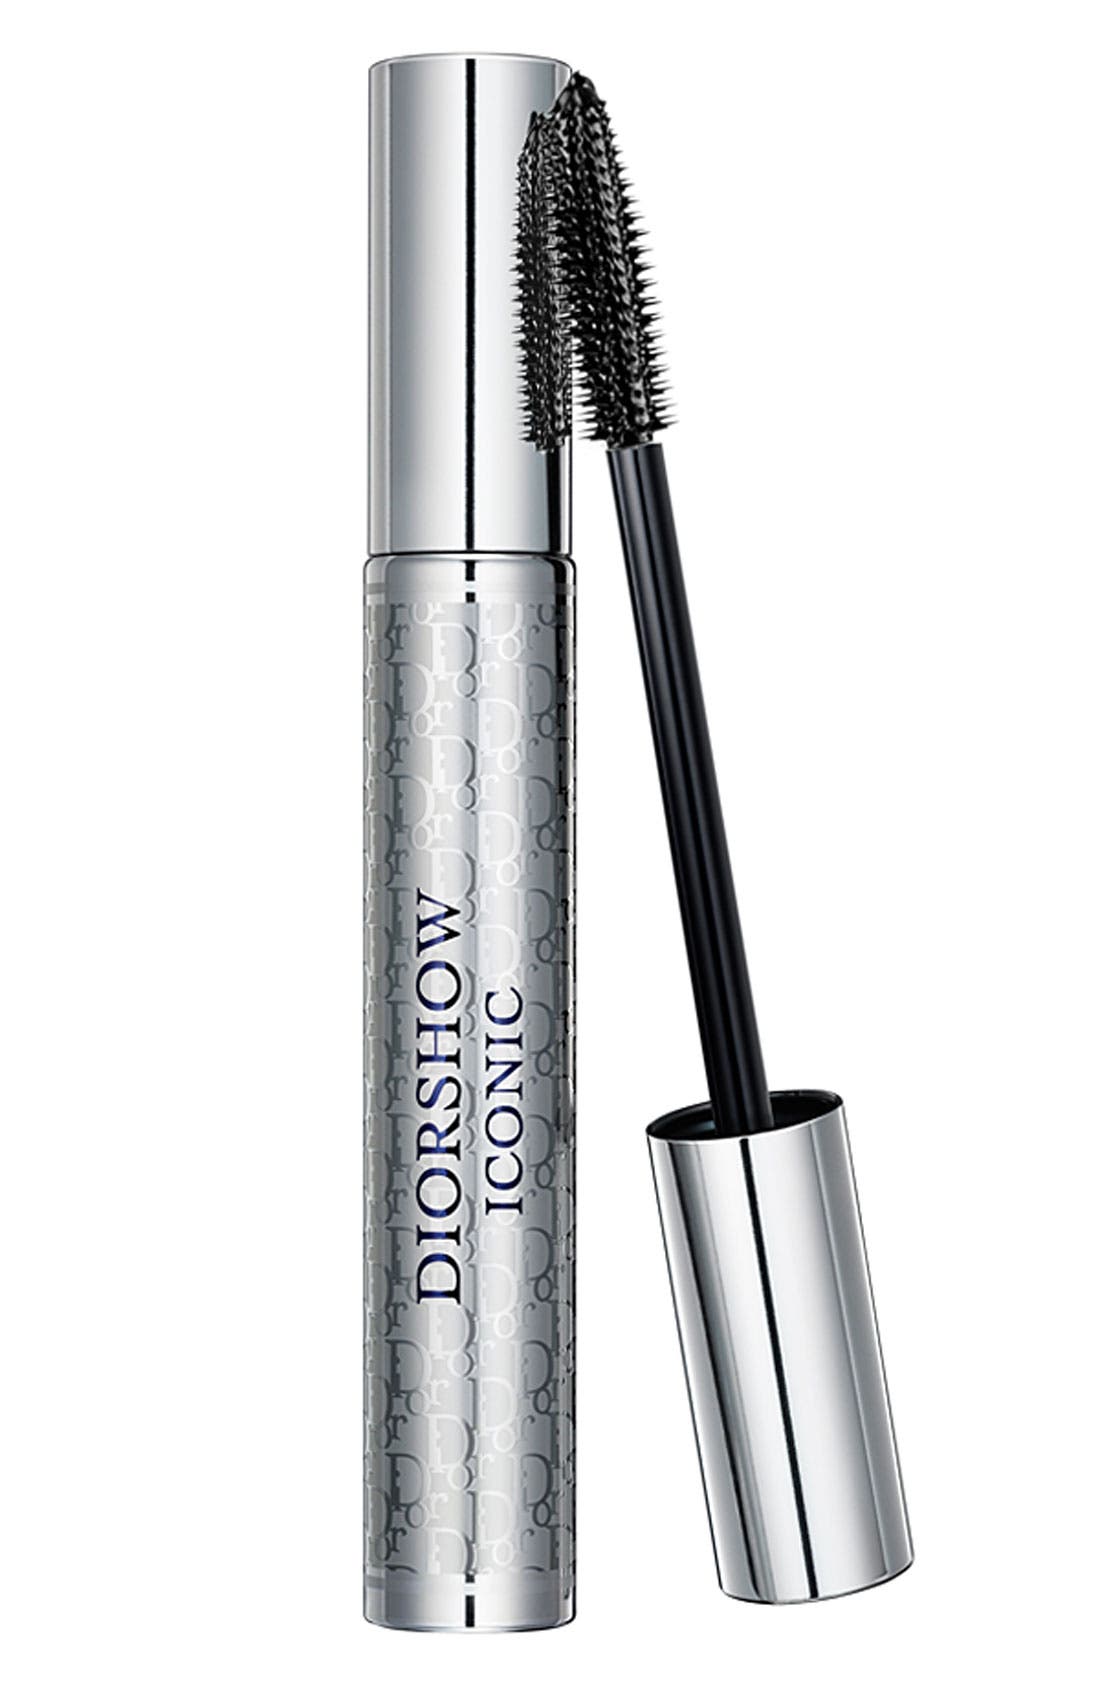 dior high definition lash curler mascara